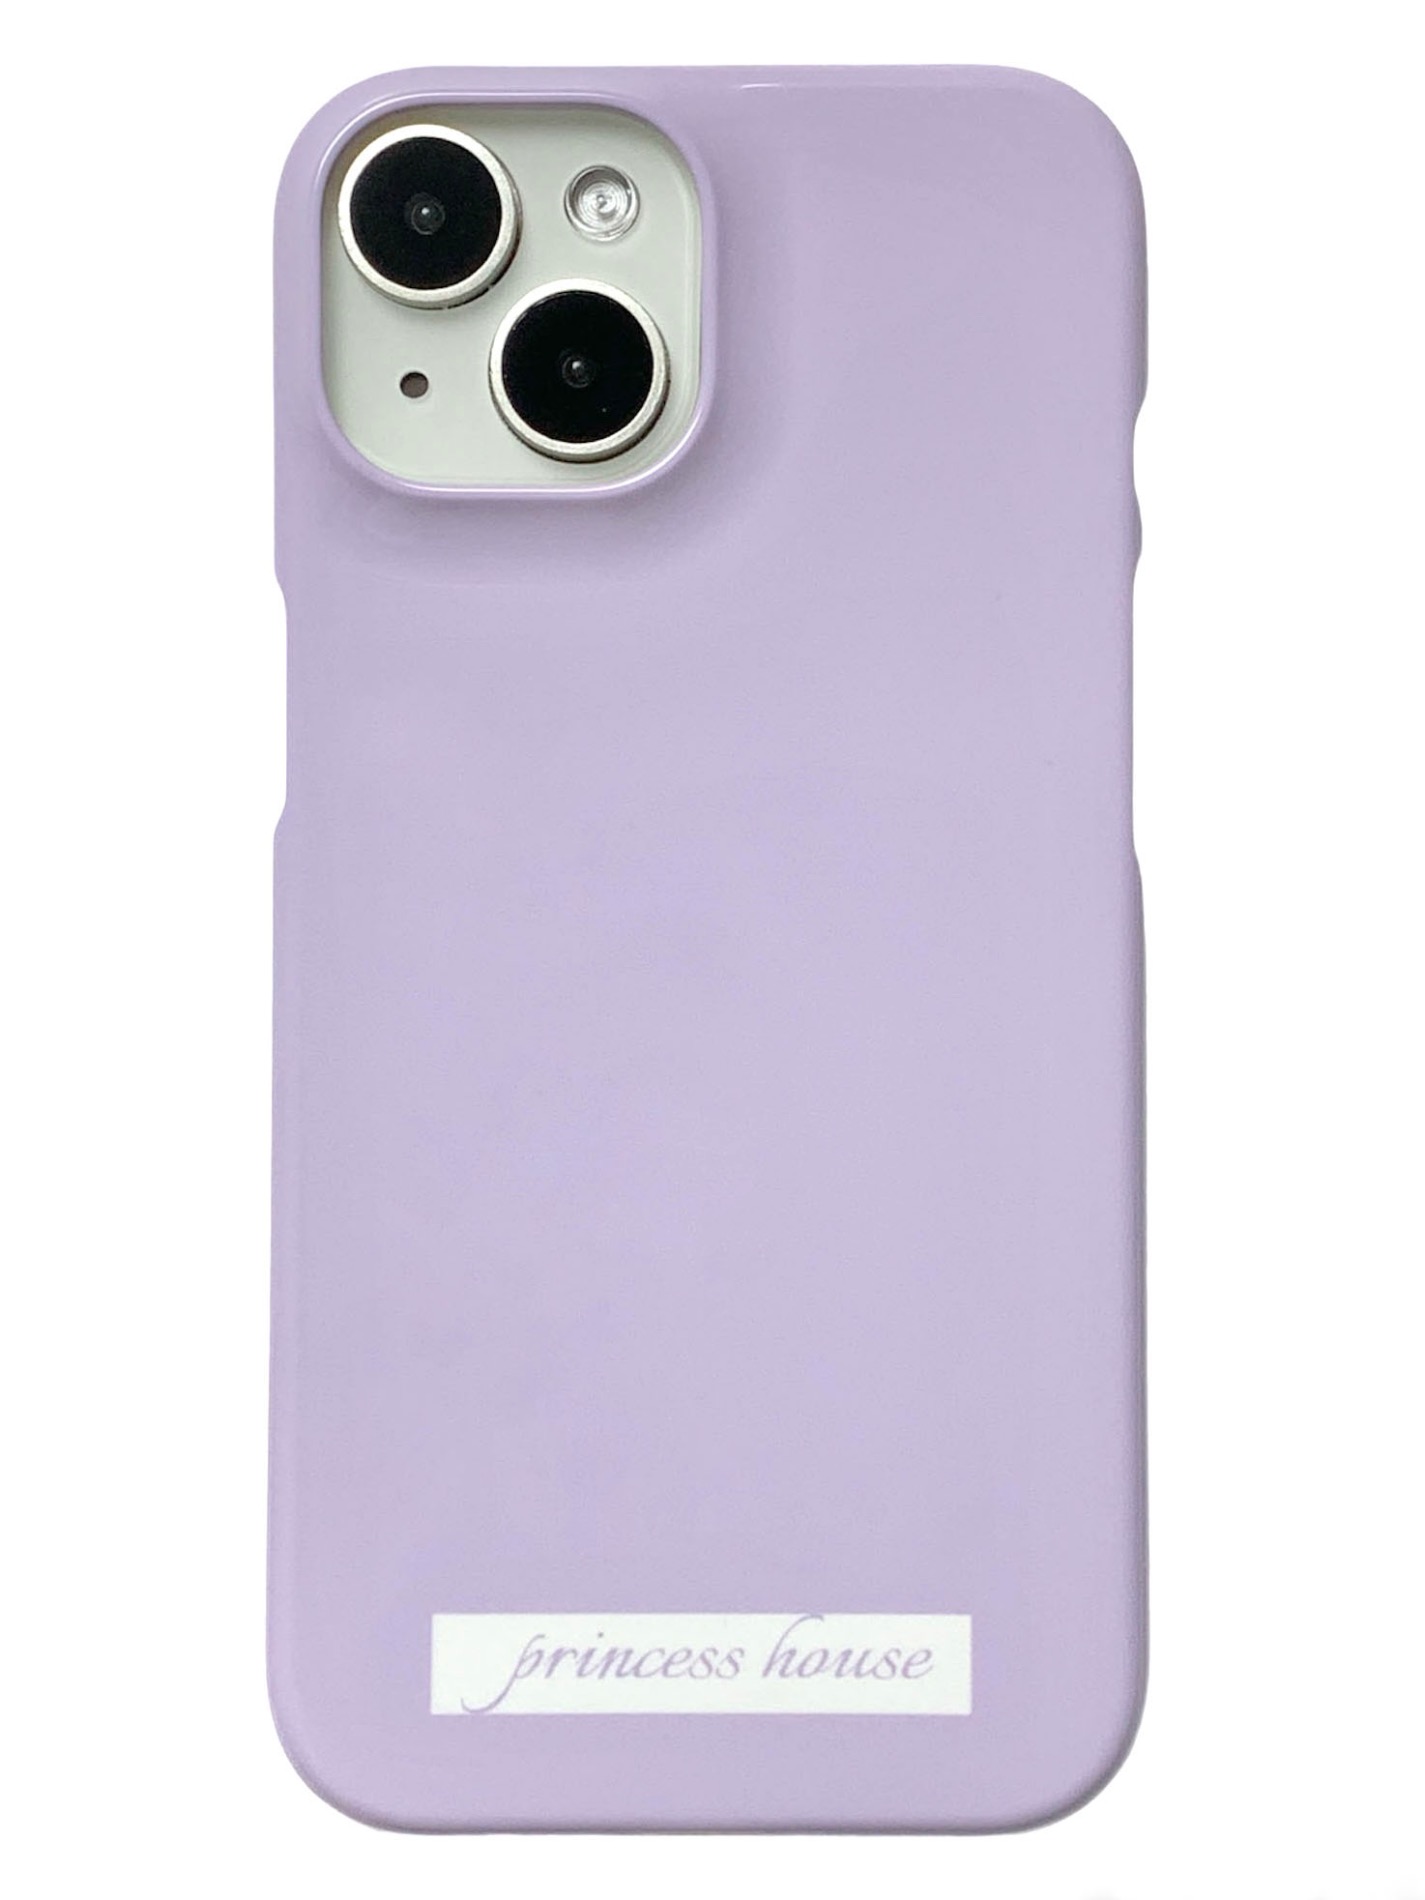 bloom purple phone case